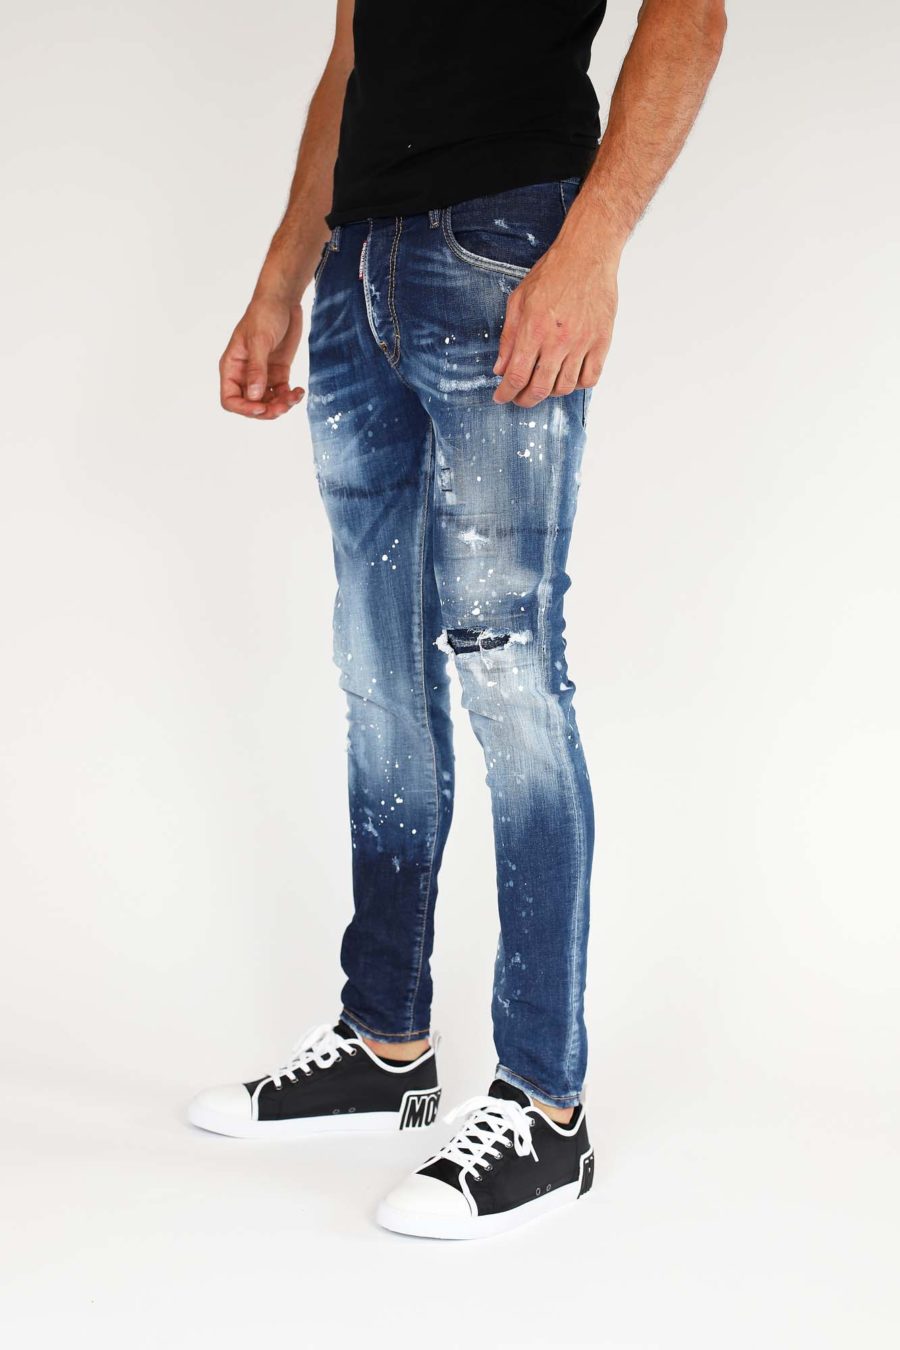 Dsquared2 - Super twinky jeans in dark blue - BLS Fashion